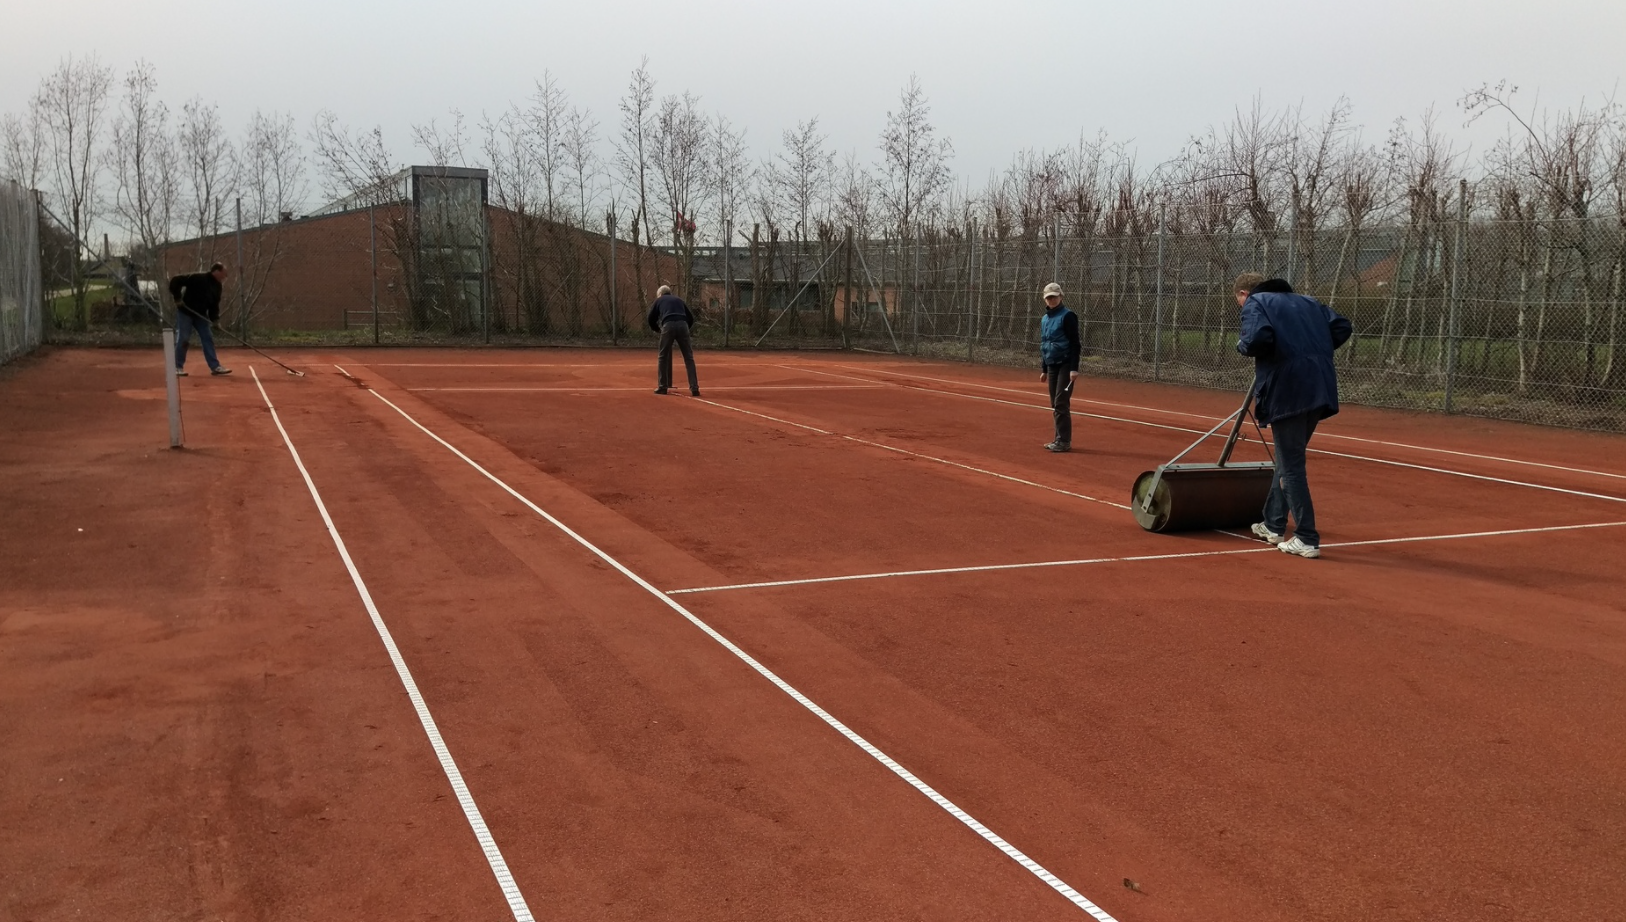 Ejby Tennisklub